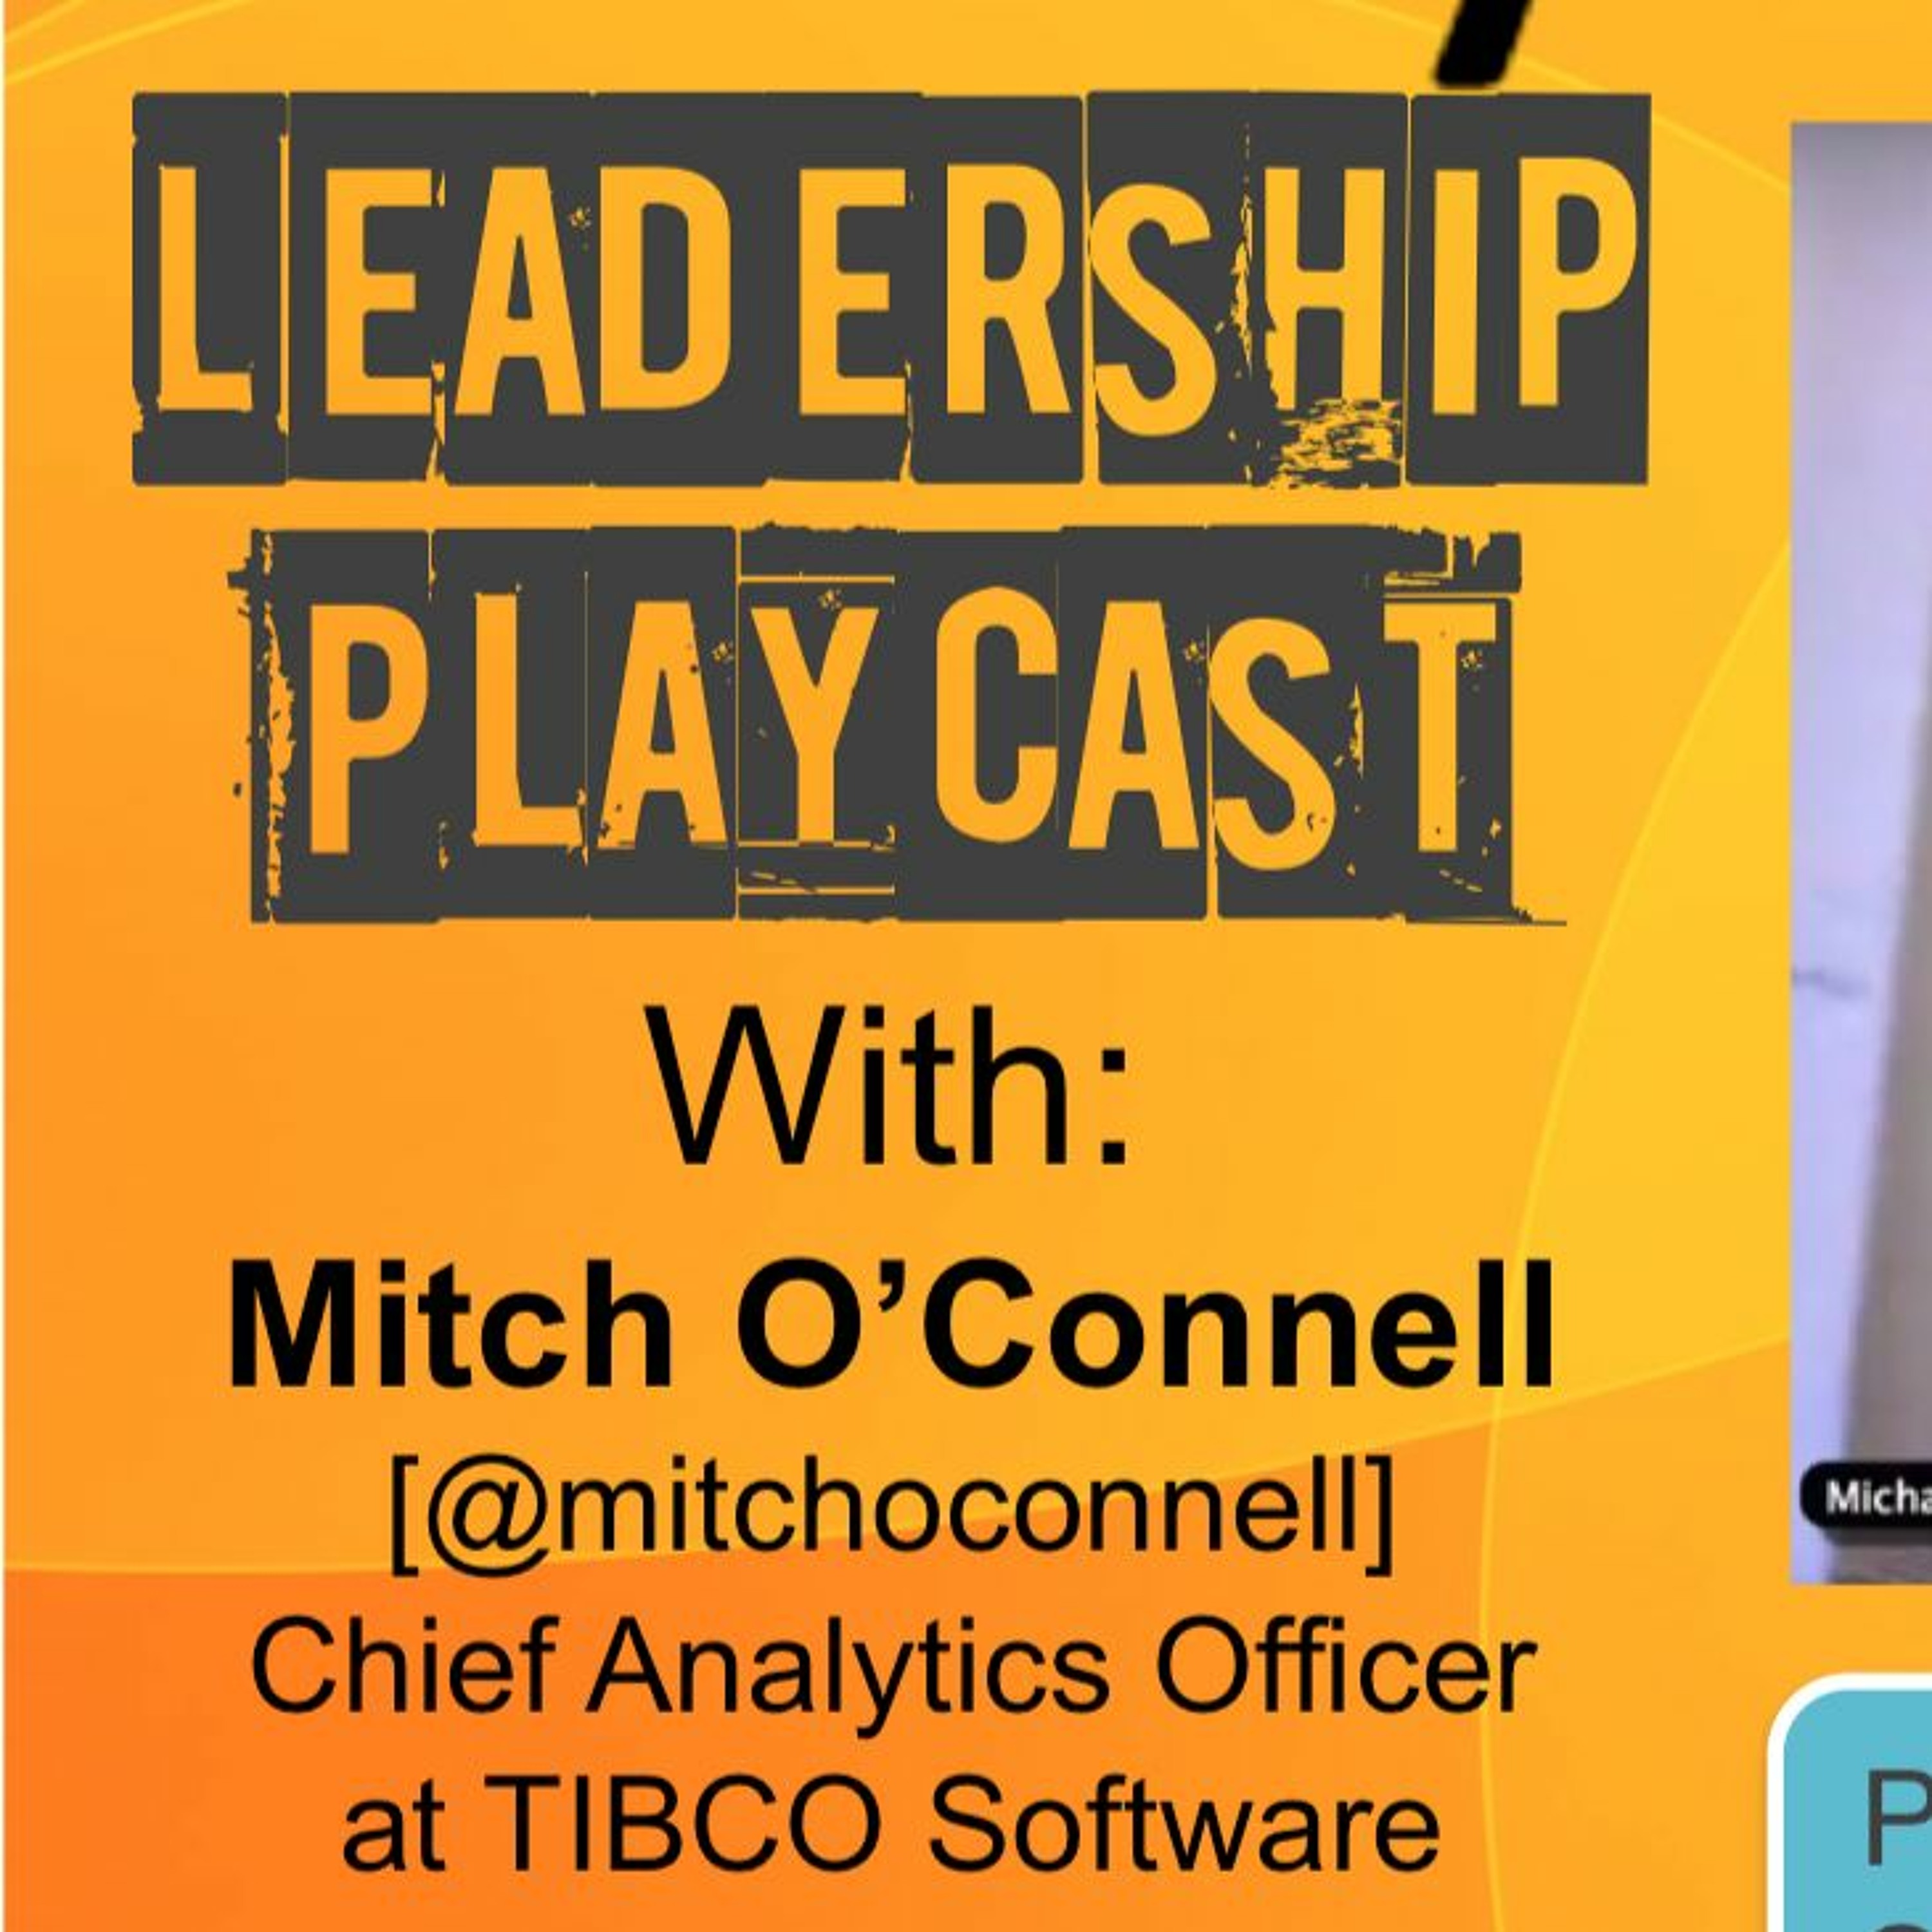 Michael O’Connell, CAO, Tibco Software